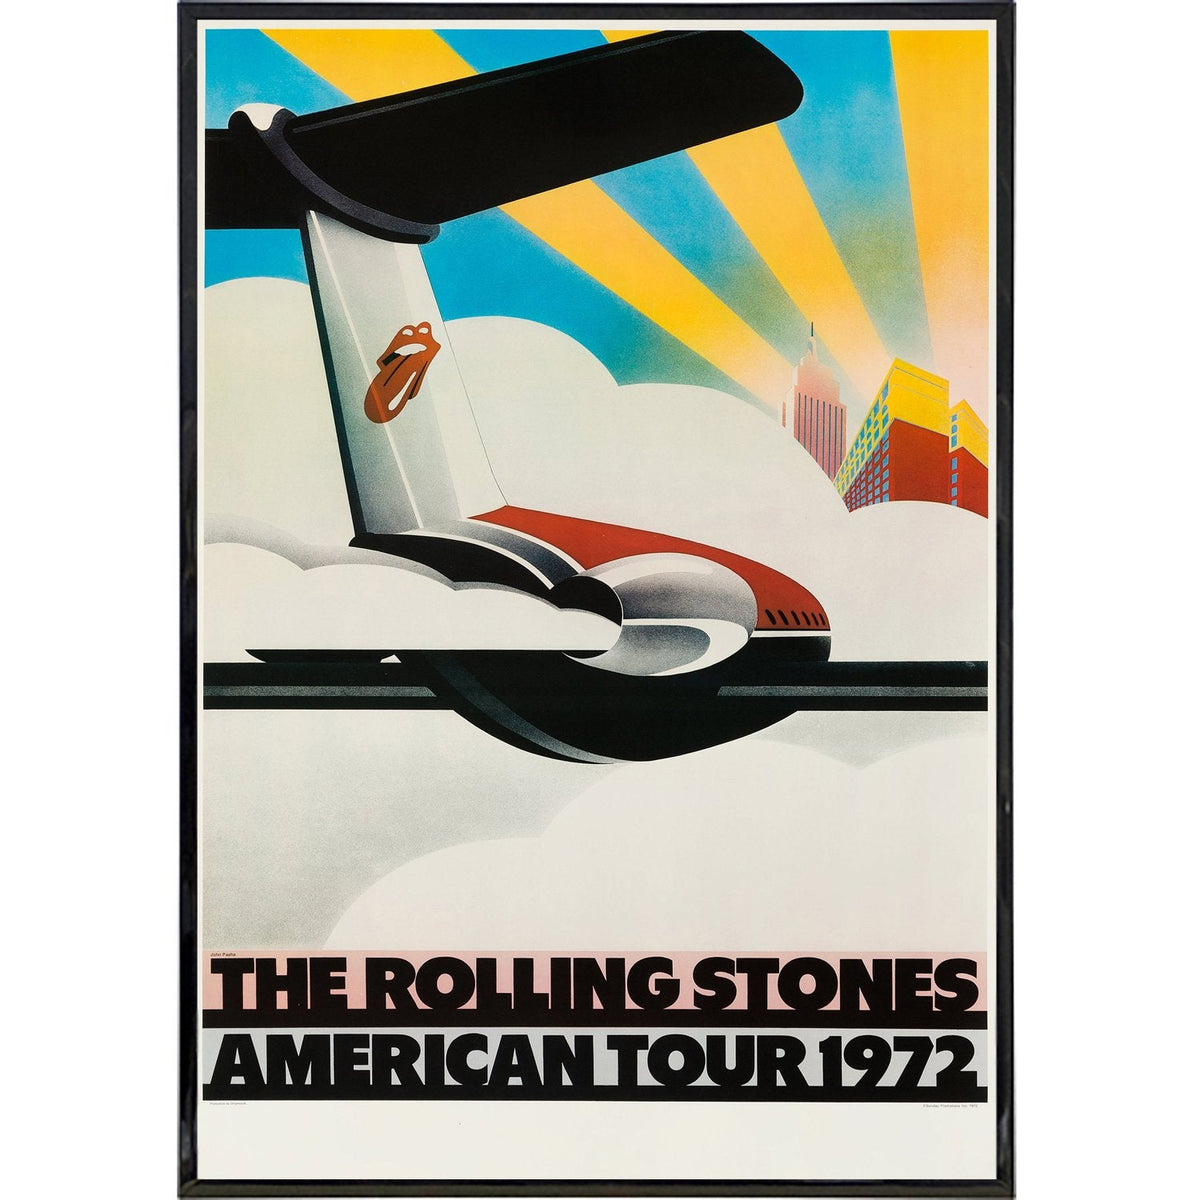 1972 tour dates